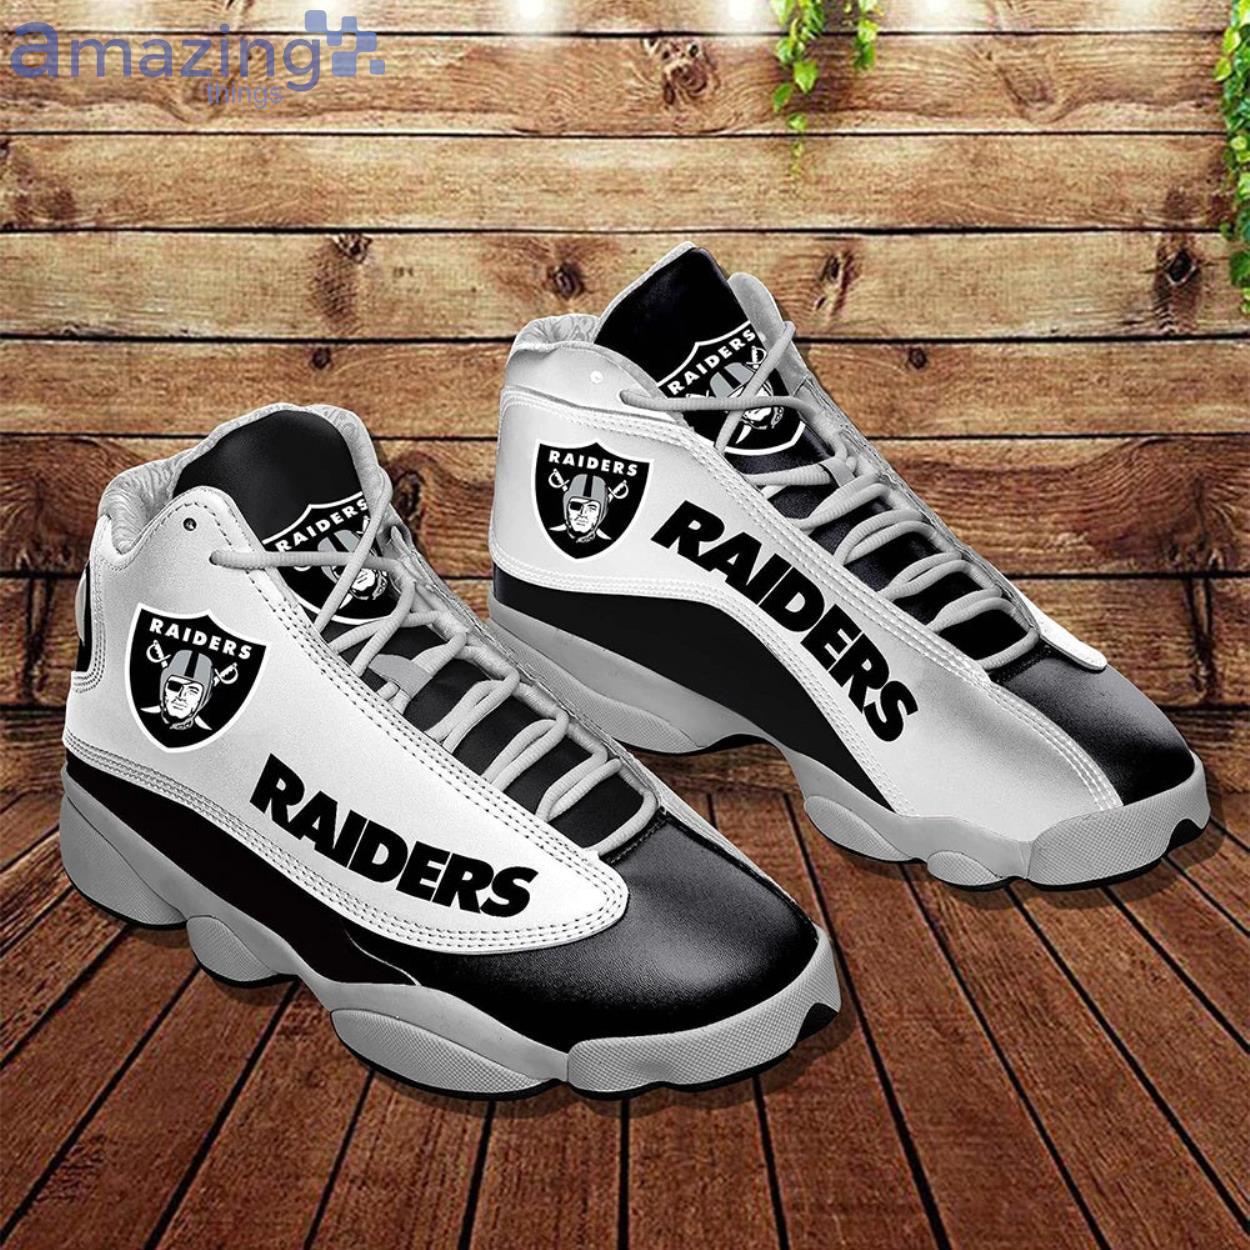 Las Vegas Raiders Air Jordan 13 Sneakers, Raiders NFL Gifts - Reallgraphics